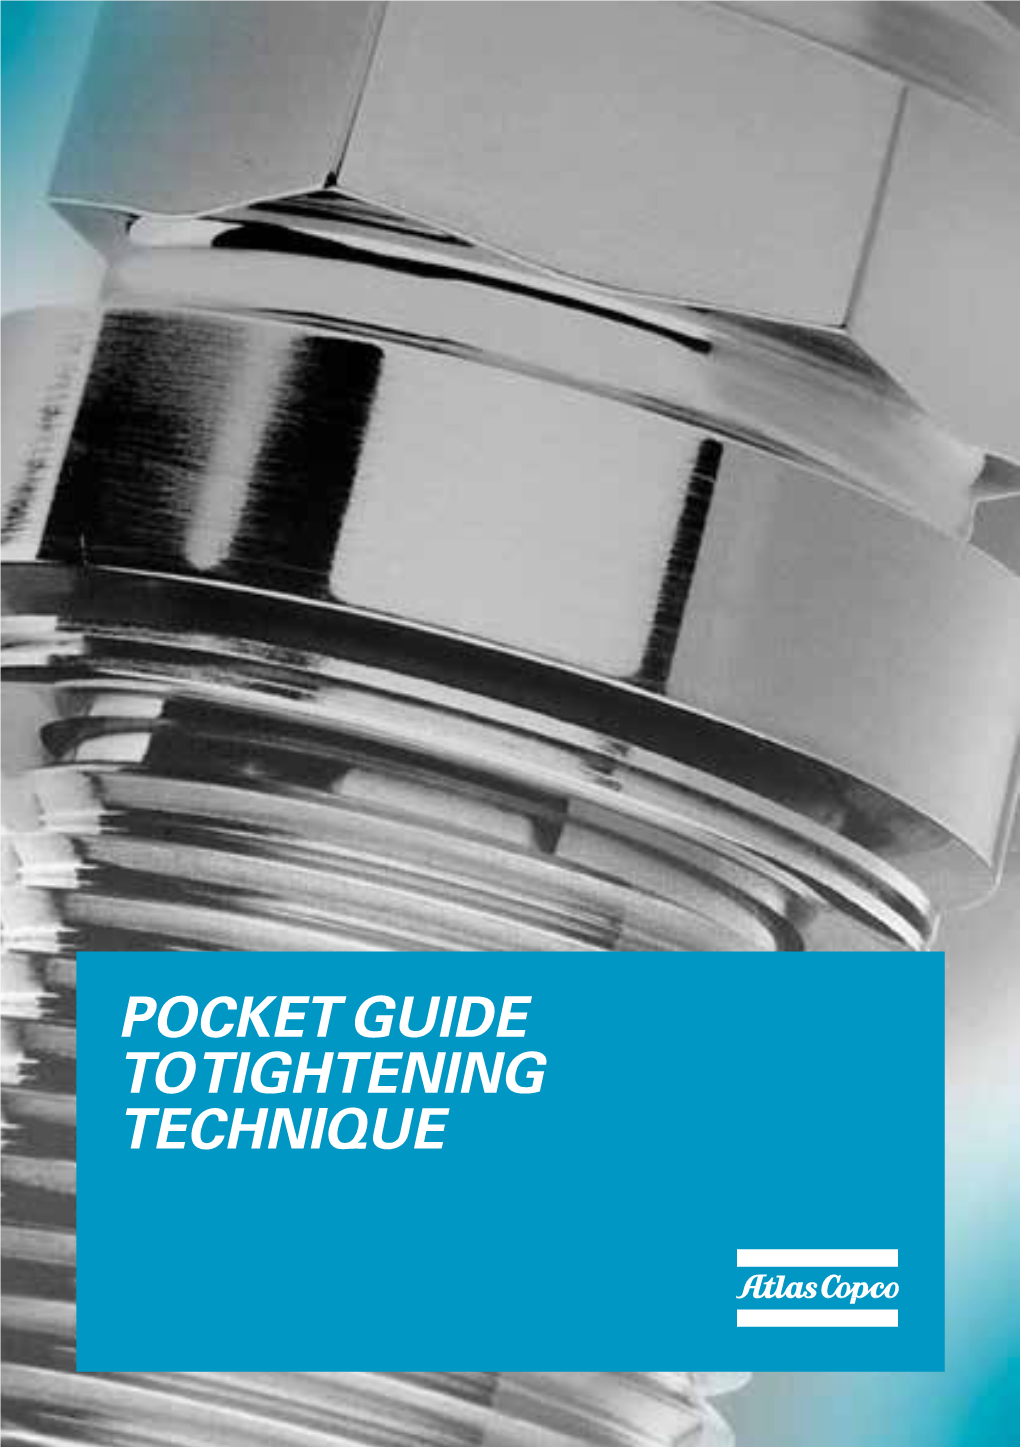 Pocket Guide to Tightening Technique 2 Pocket Guide to Tightening Technique Pocket Guide to Tightening Technique